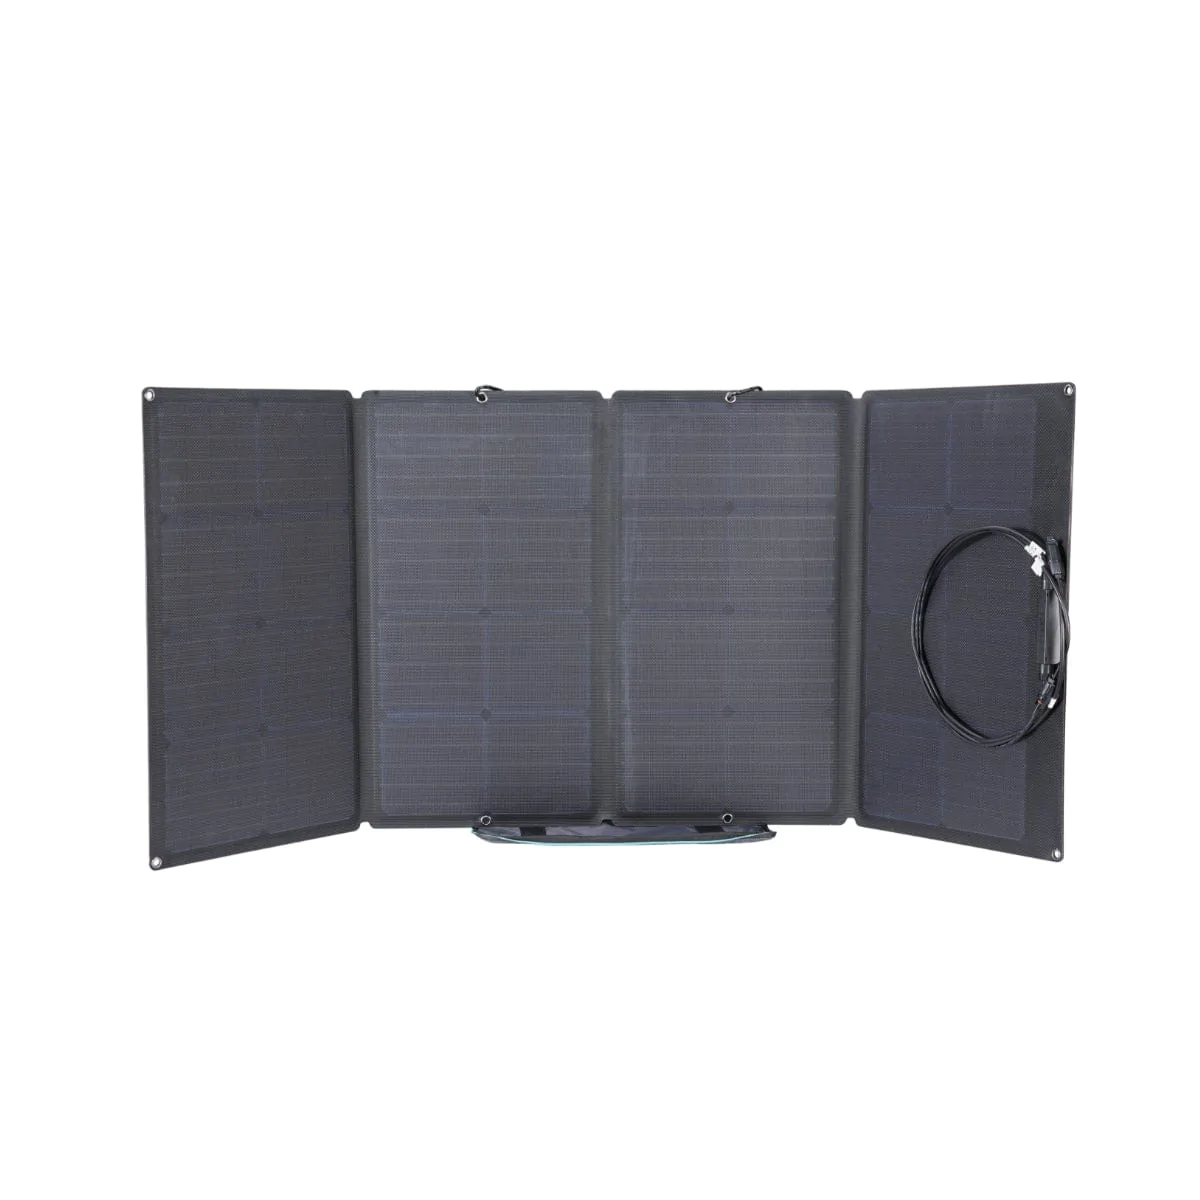 EcoFlow 160W Solar-Energie Panel faltbar